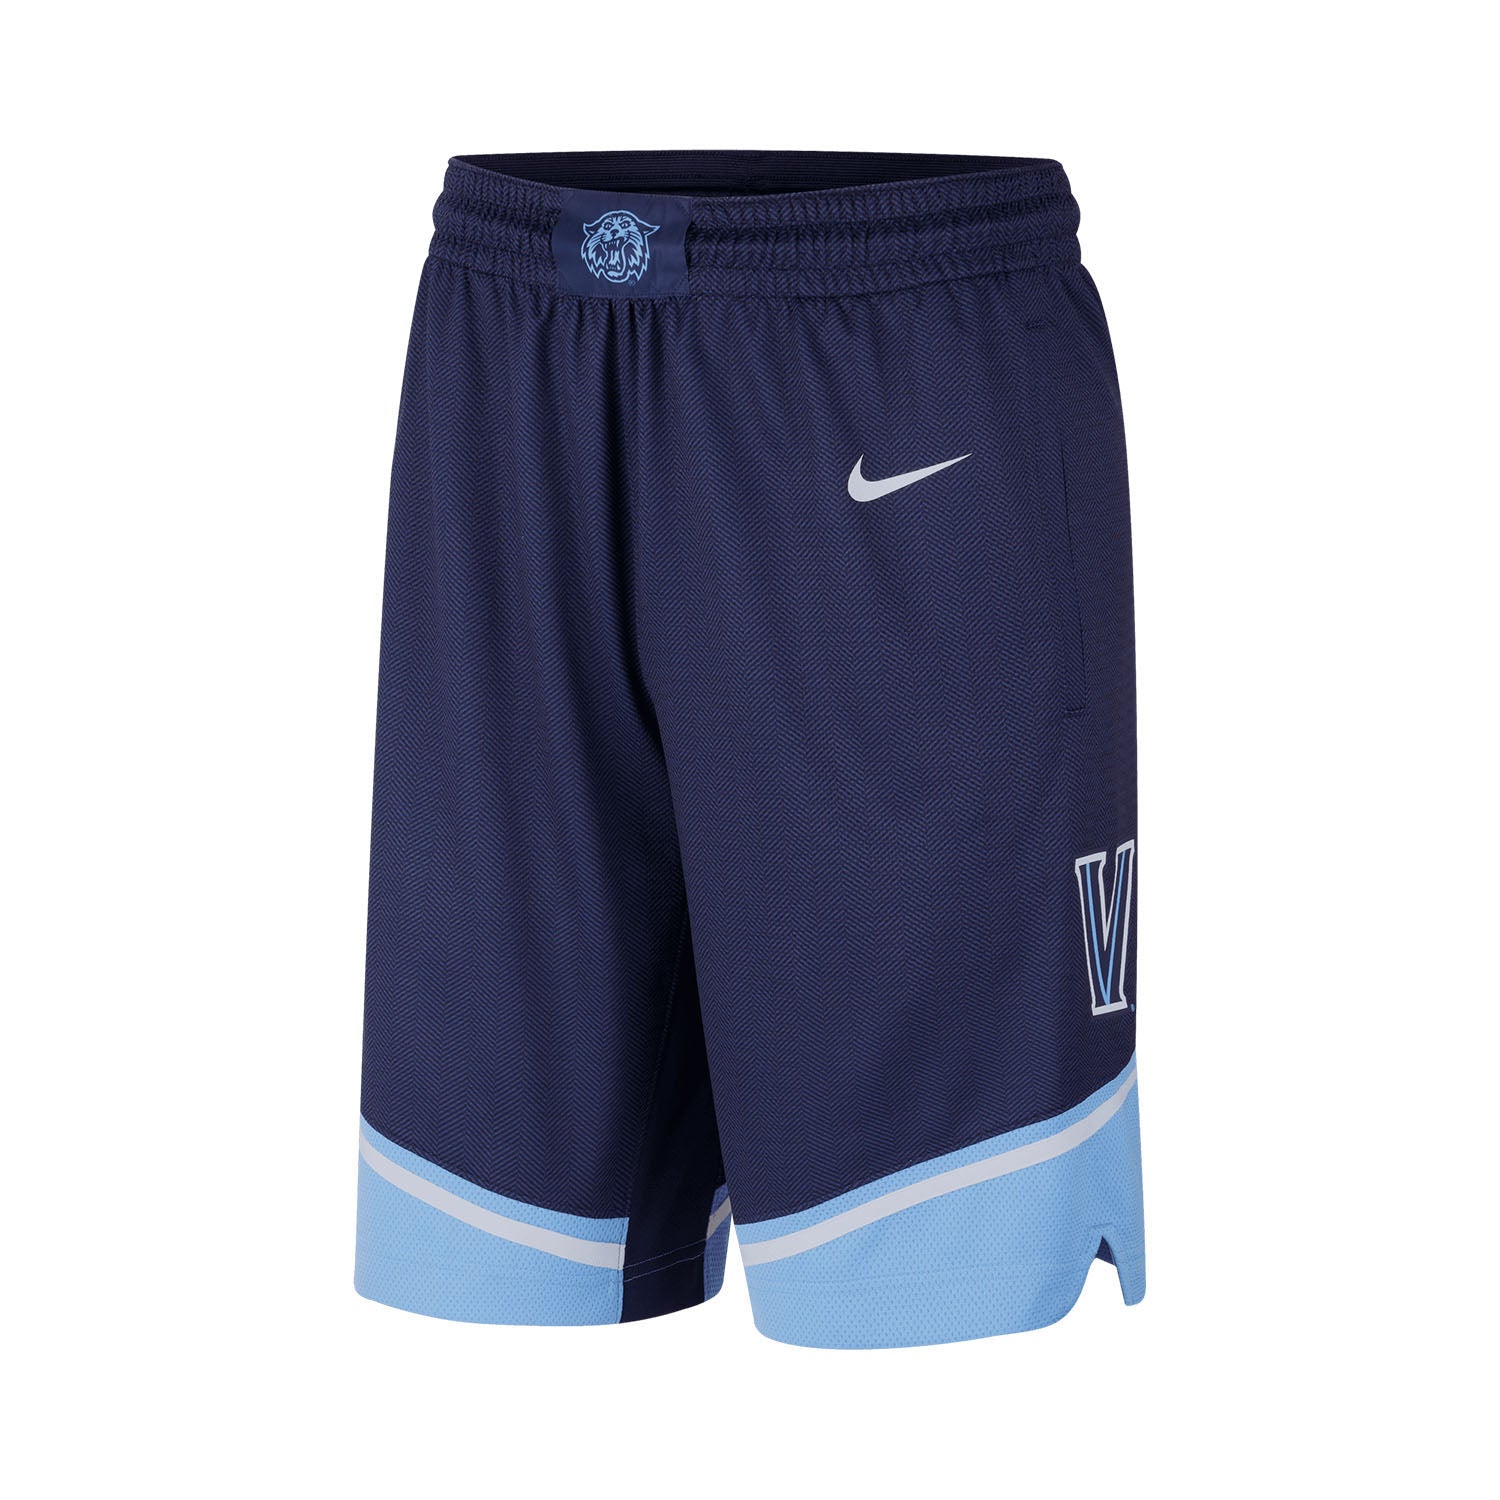 Men's Villanova Pants & Shorts | Villanova Official Online Store